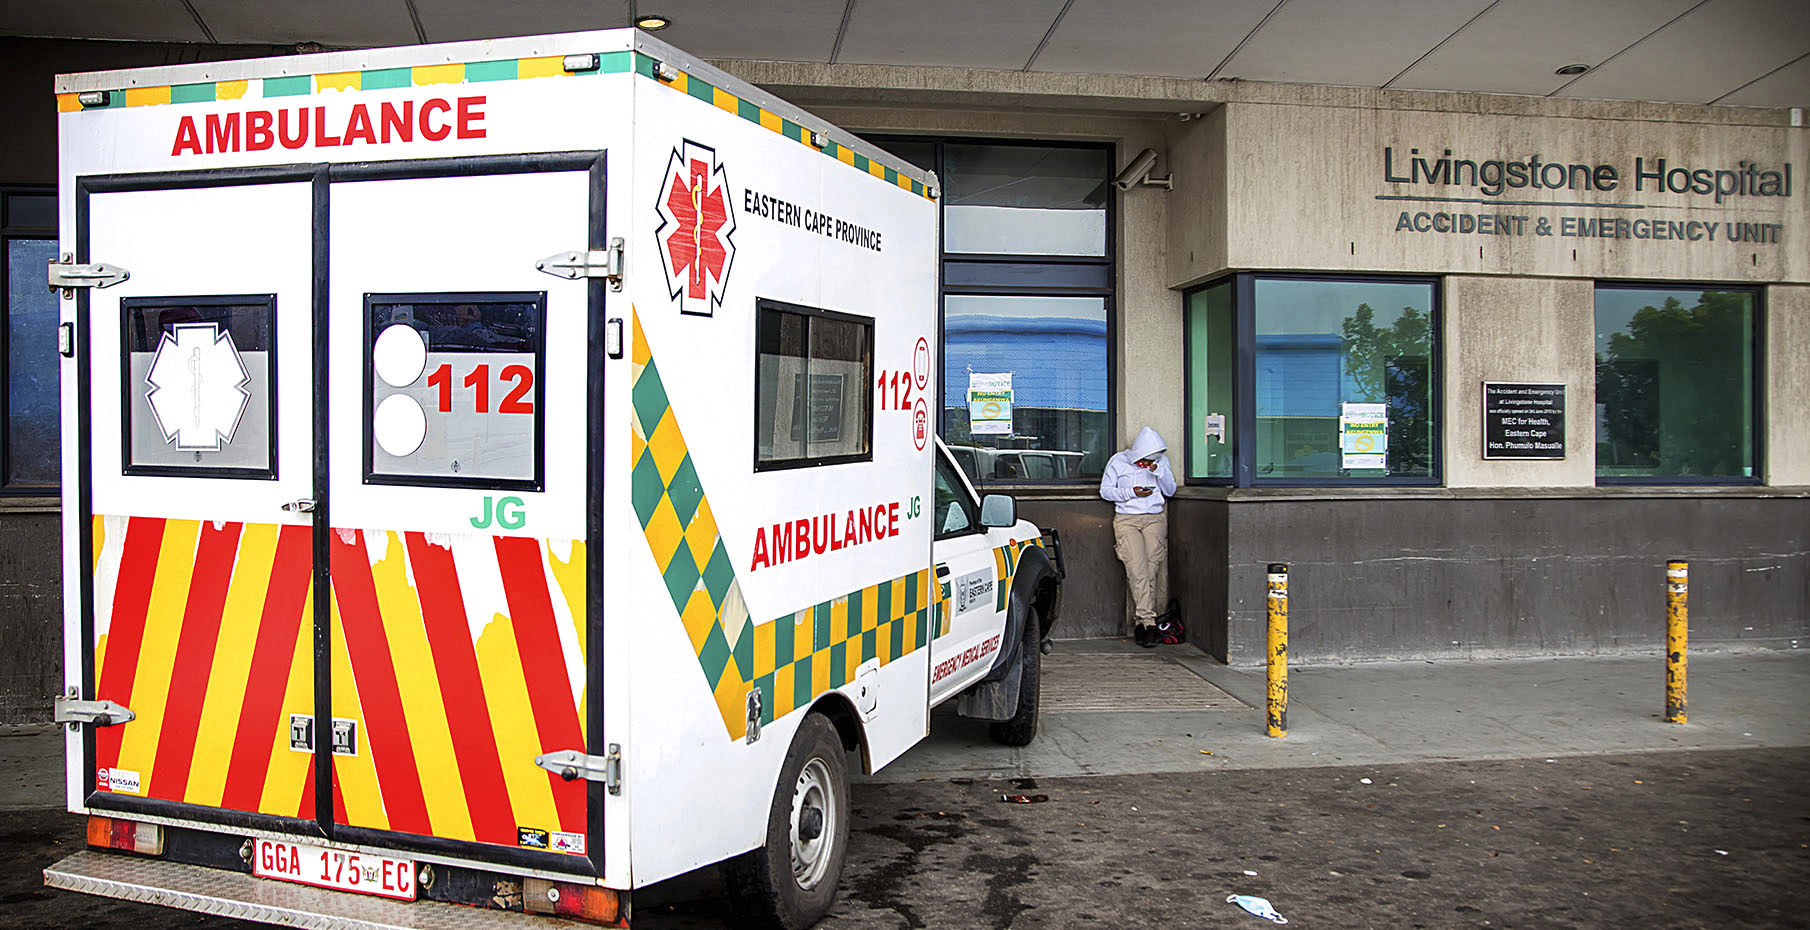 An image of an ambulance parked outside Livingstone Hospital 